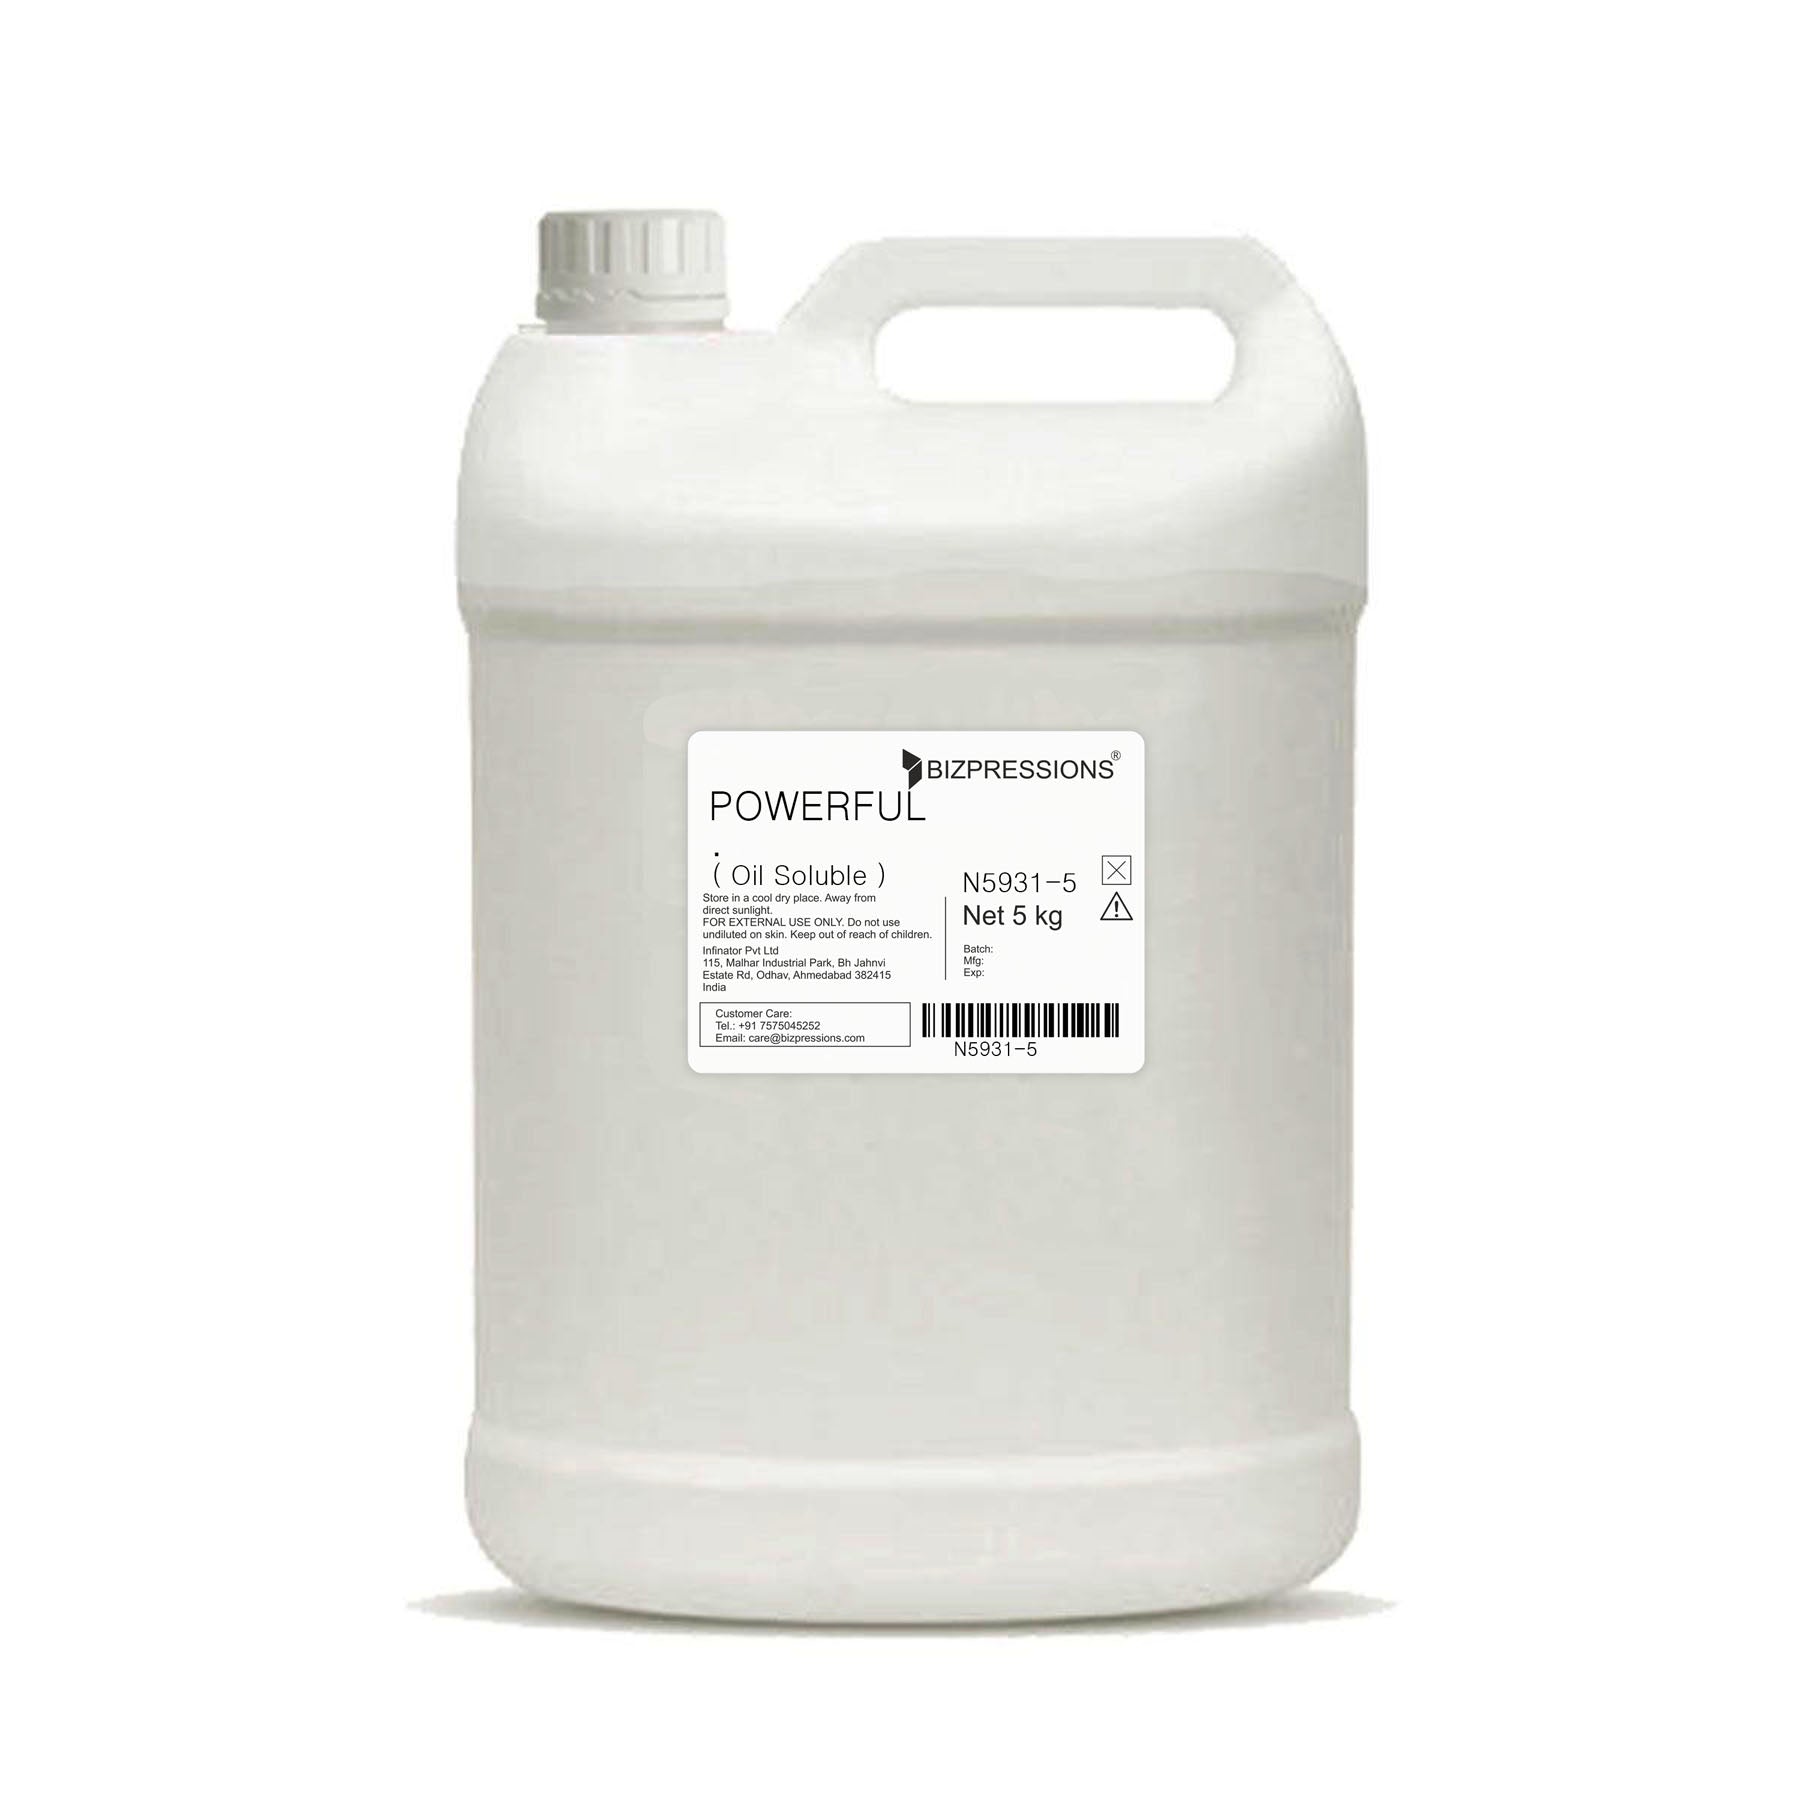 POWERFUL - Fragrance ( Oil Soluble ) - 5 kg